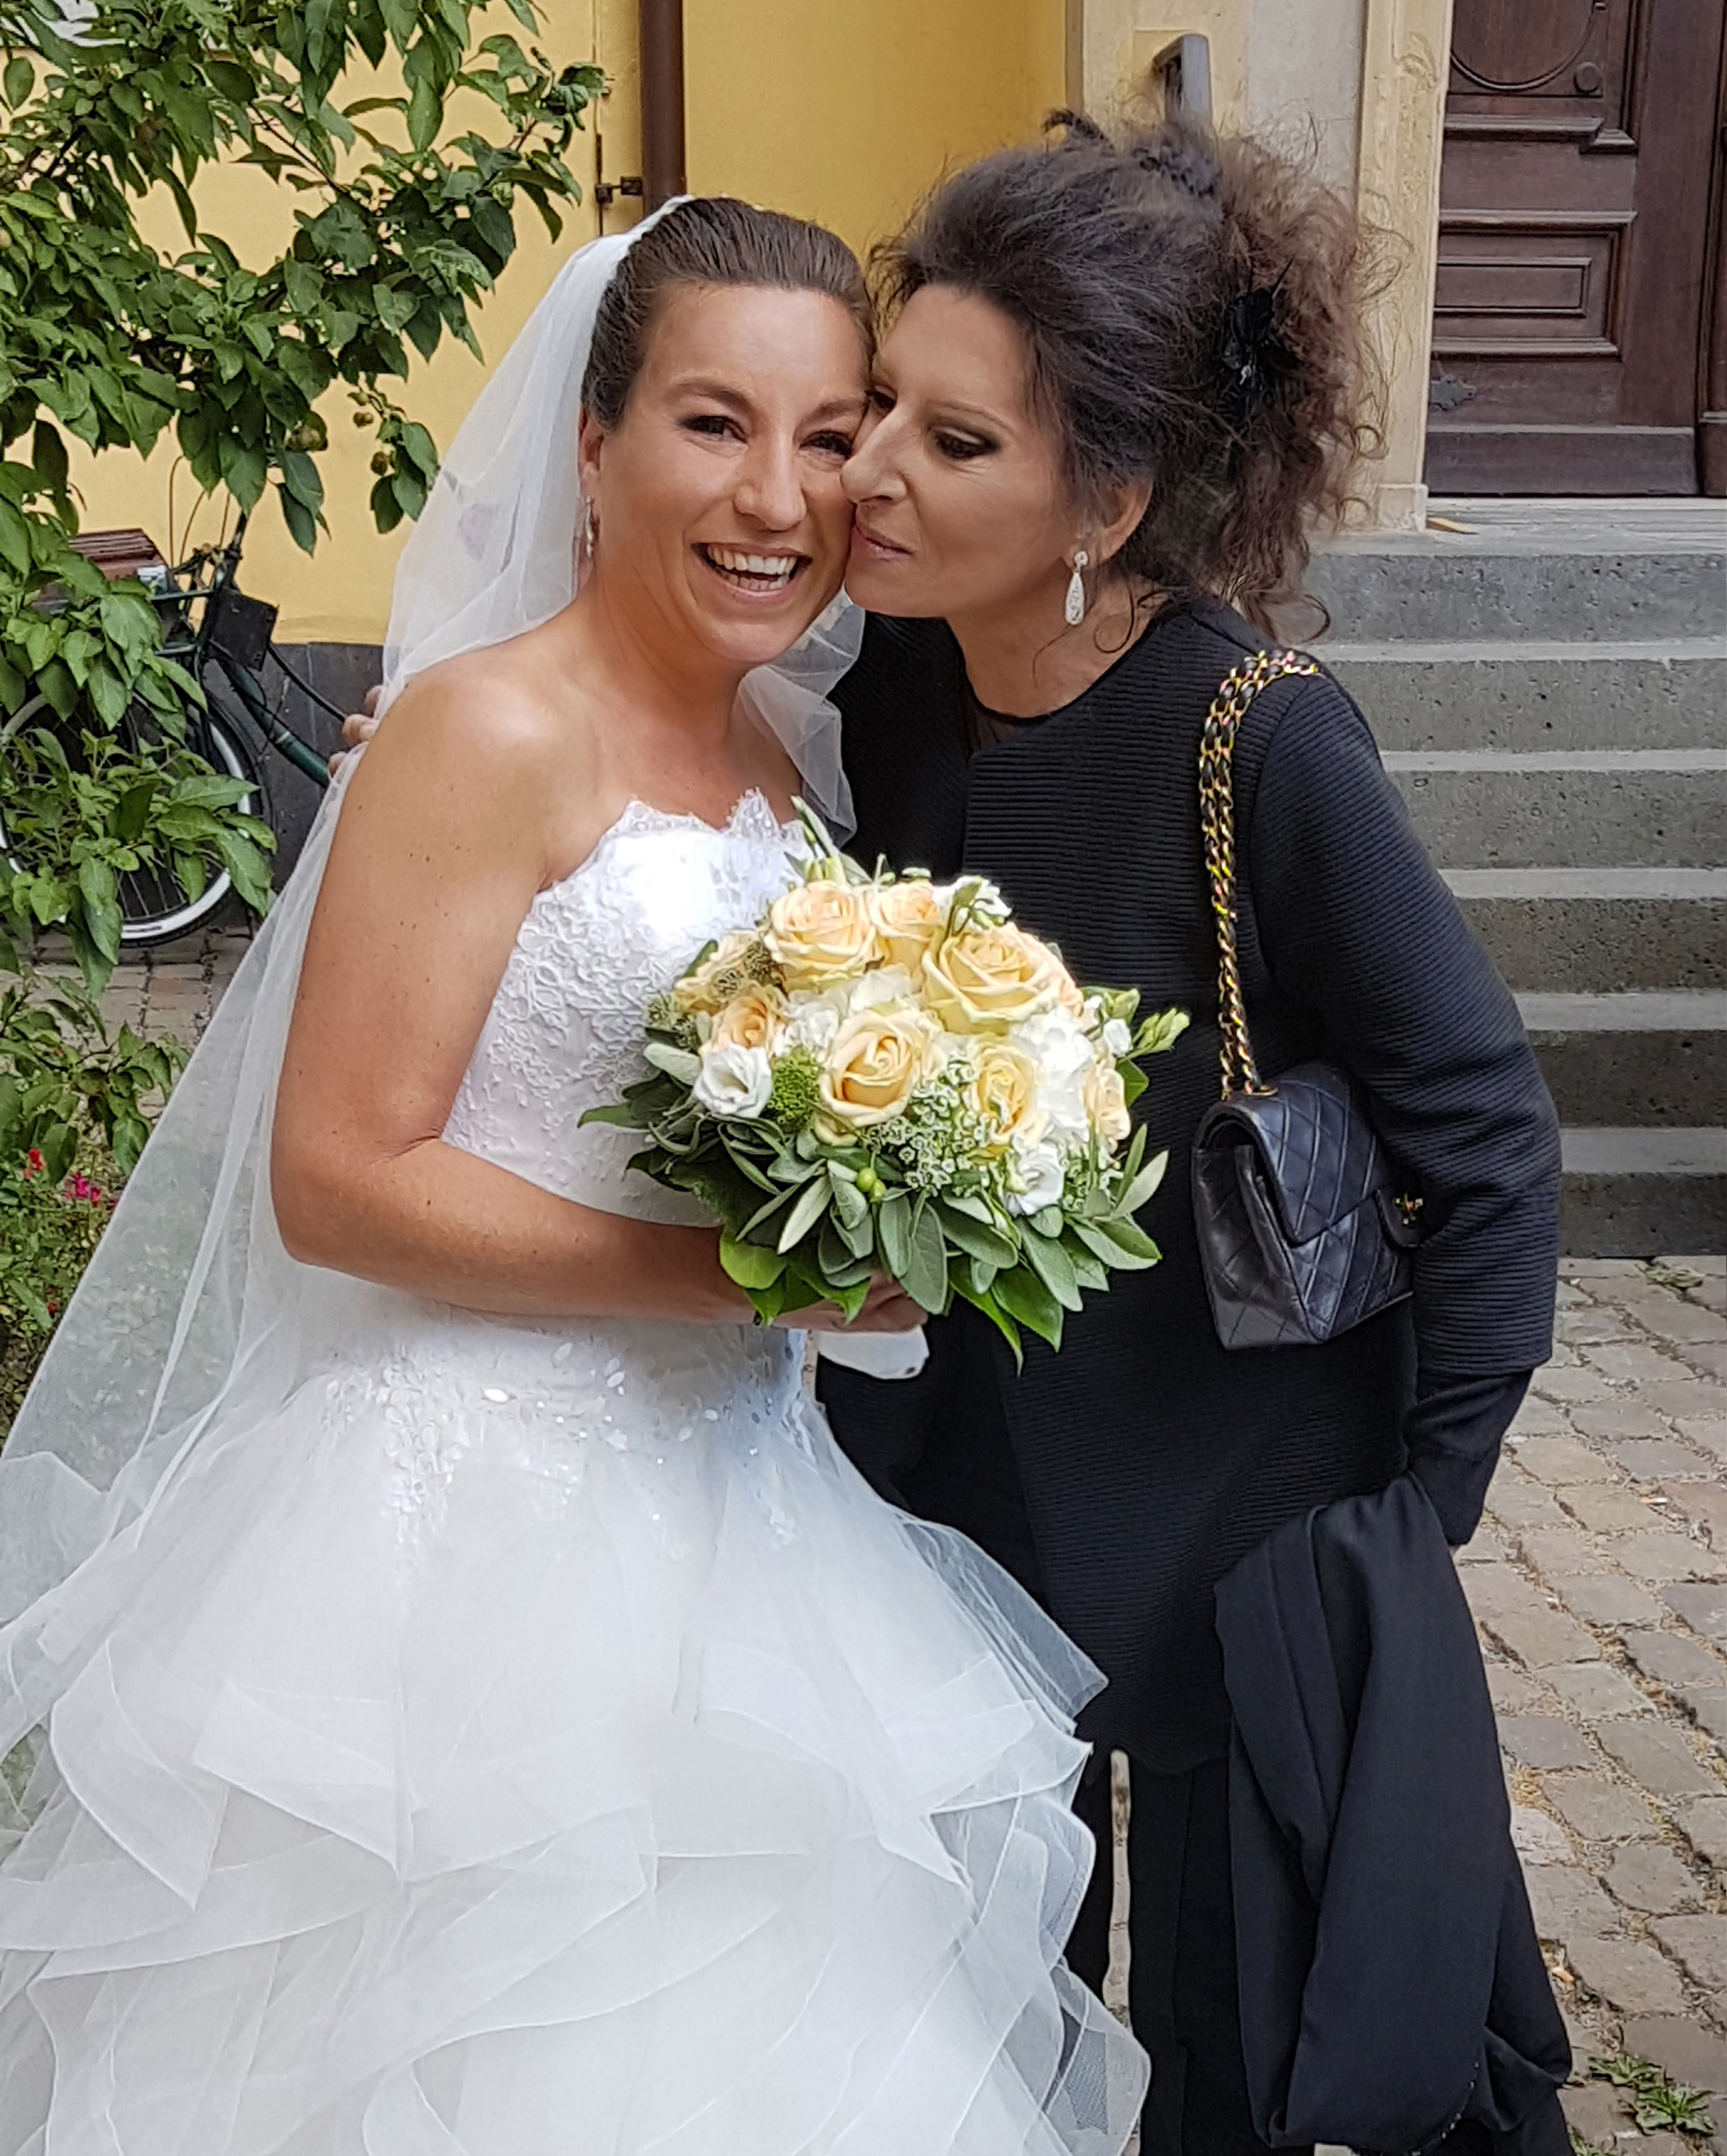 Lucia Aliberti with her great friend Bernadette Herzog⚘Wedding⚘Dusseldorf⚘Armani Fashion⚘:http://www.luciaaliberti.it #luciaaliberti #bernadetteherzog #wedding #dusseldorf #armanifashion